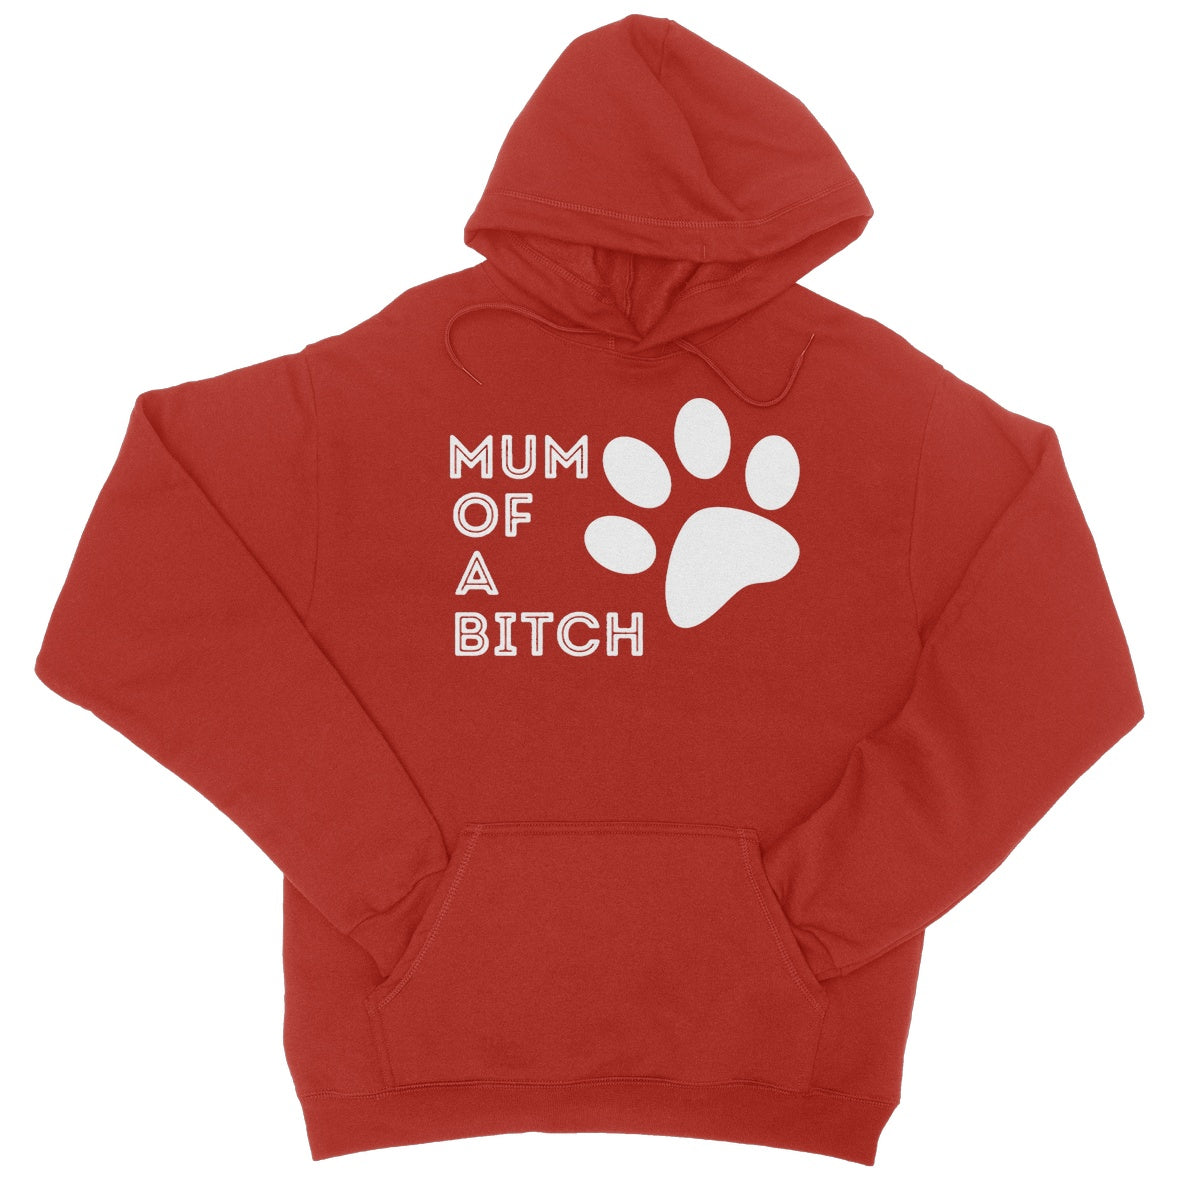 mum of a bitch hoodie red